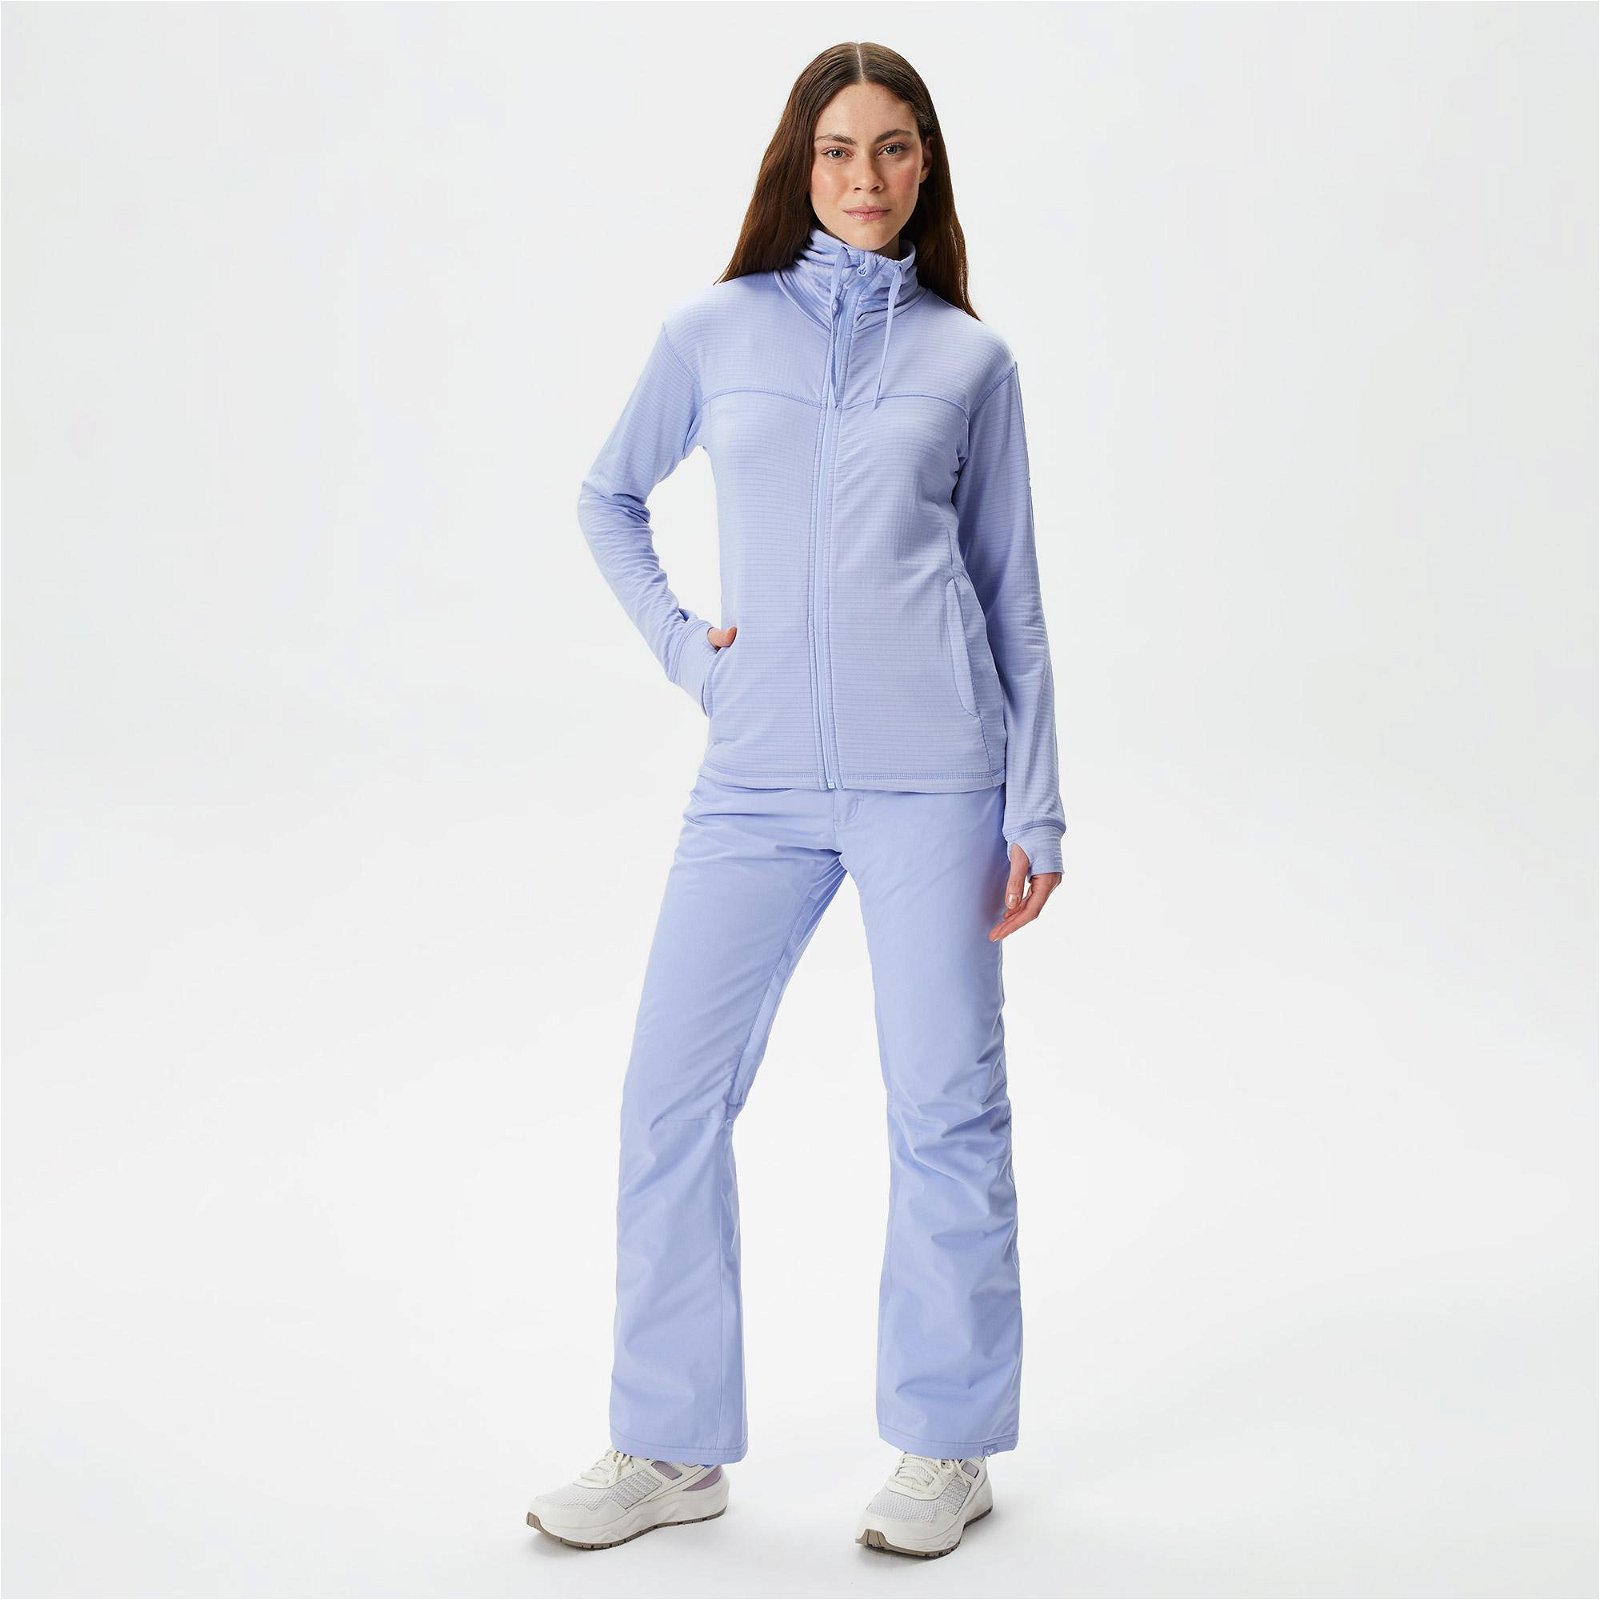 Roxy Vertere Full Zip Kadın Mavi Sweatshirt